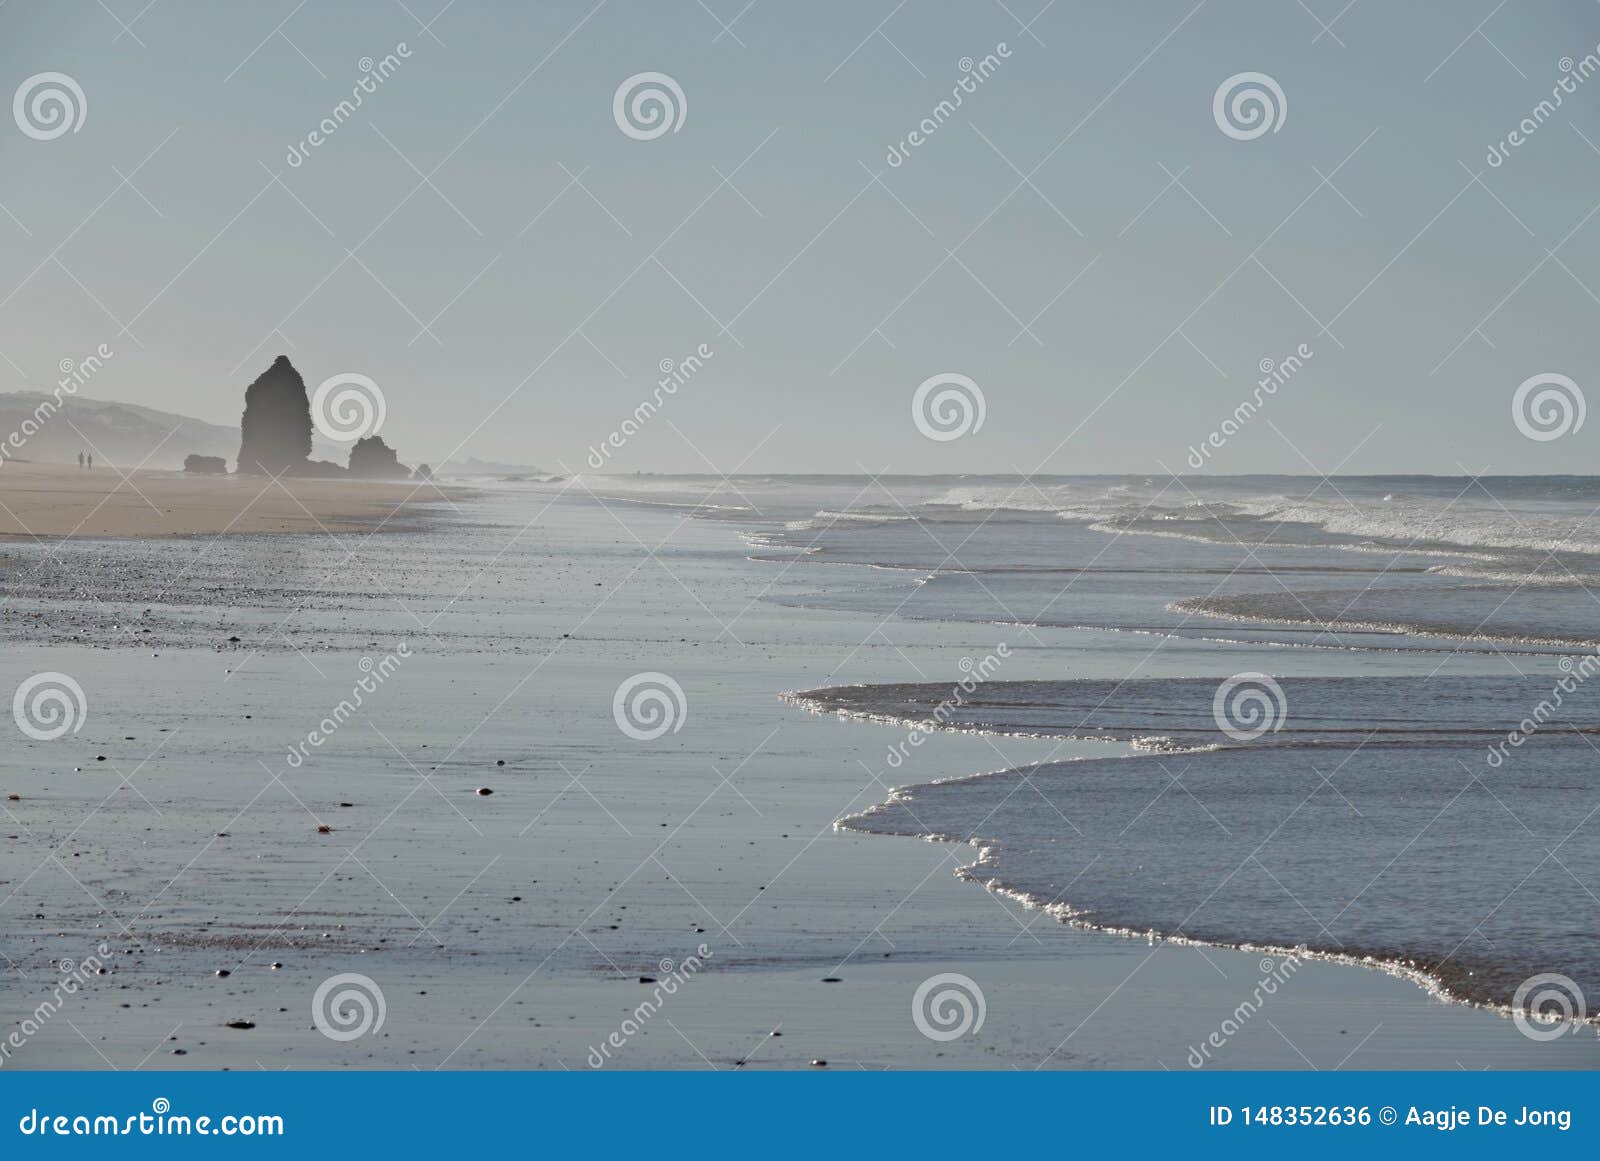 tower ruin at playa de rompeculos beach in mazagon, spain